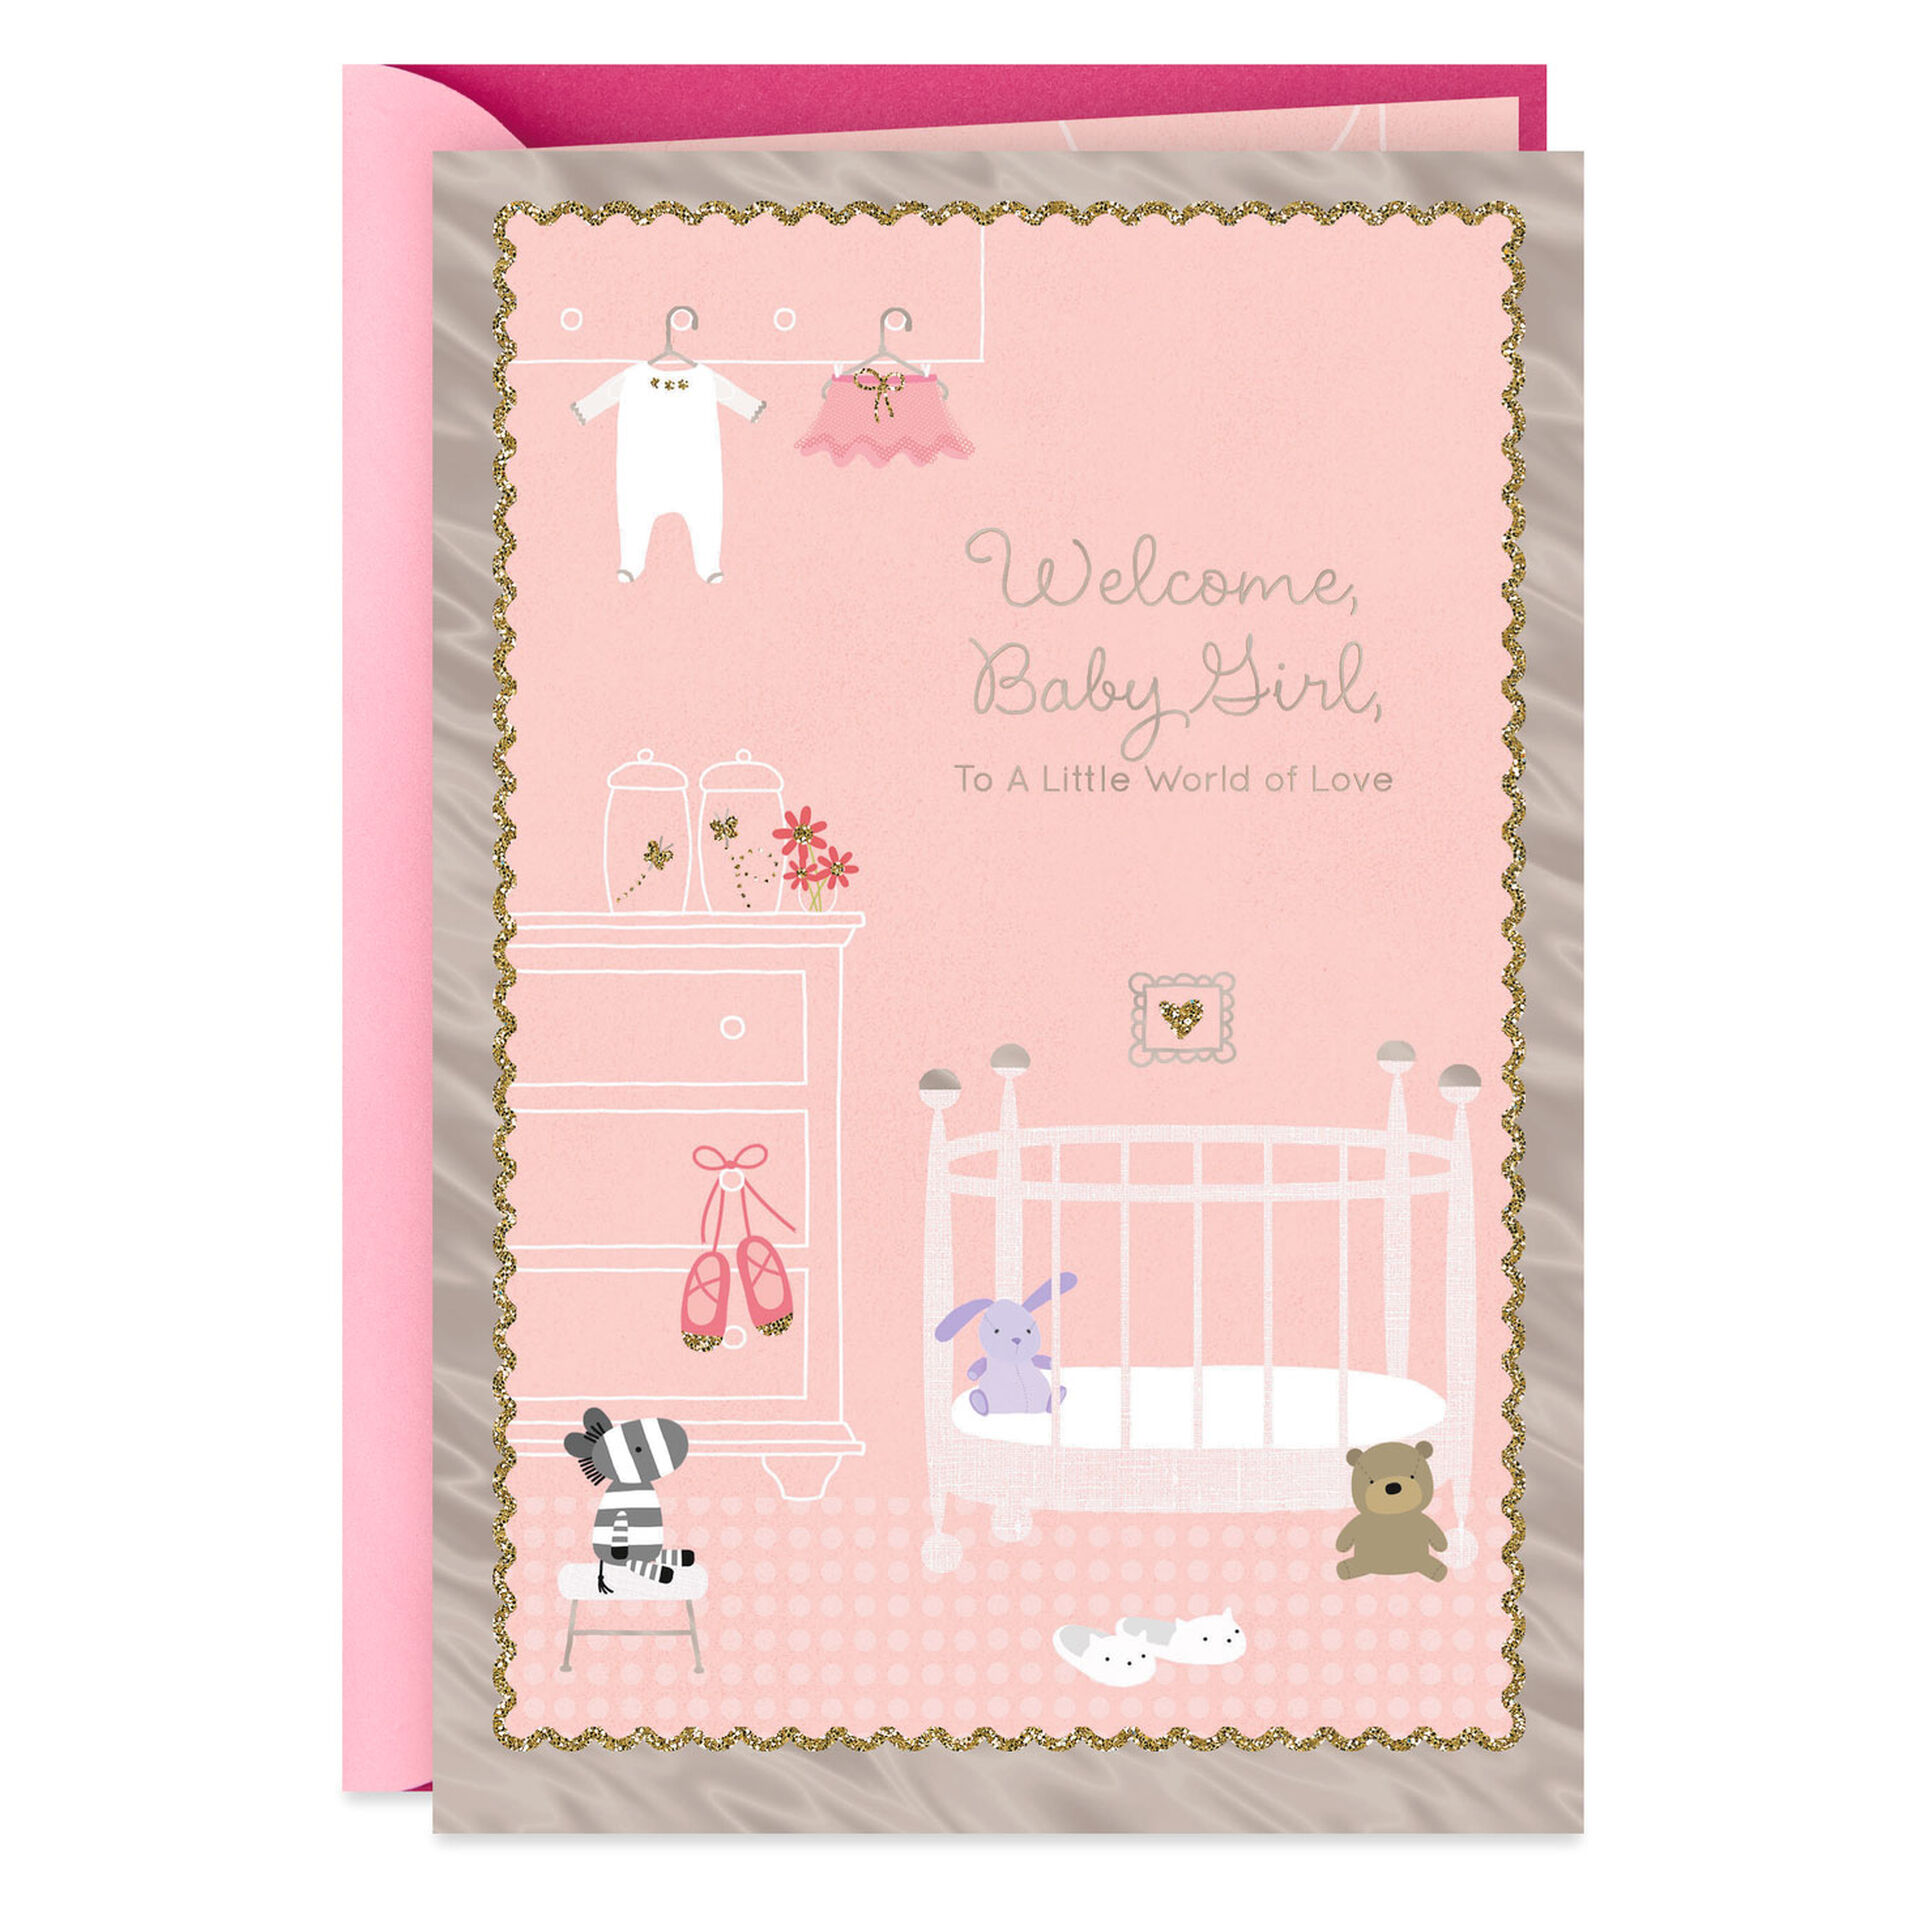 Nursery-Religious-New-Baby-Card_399CEY2442_01